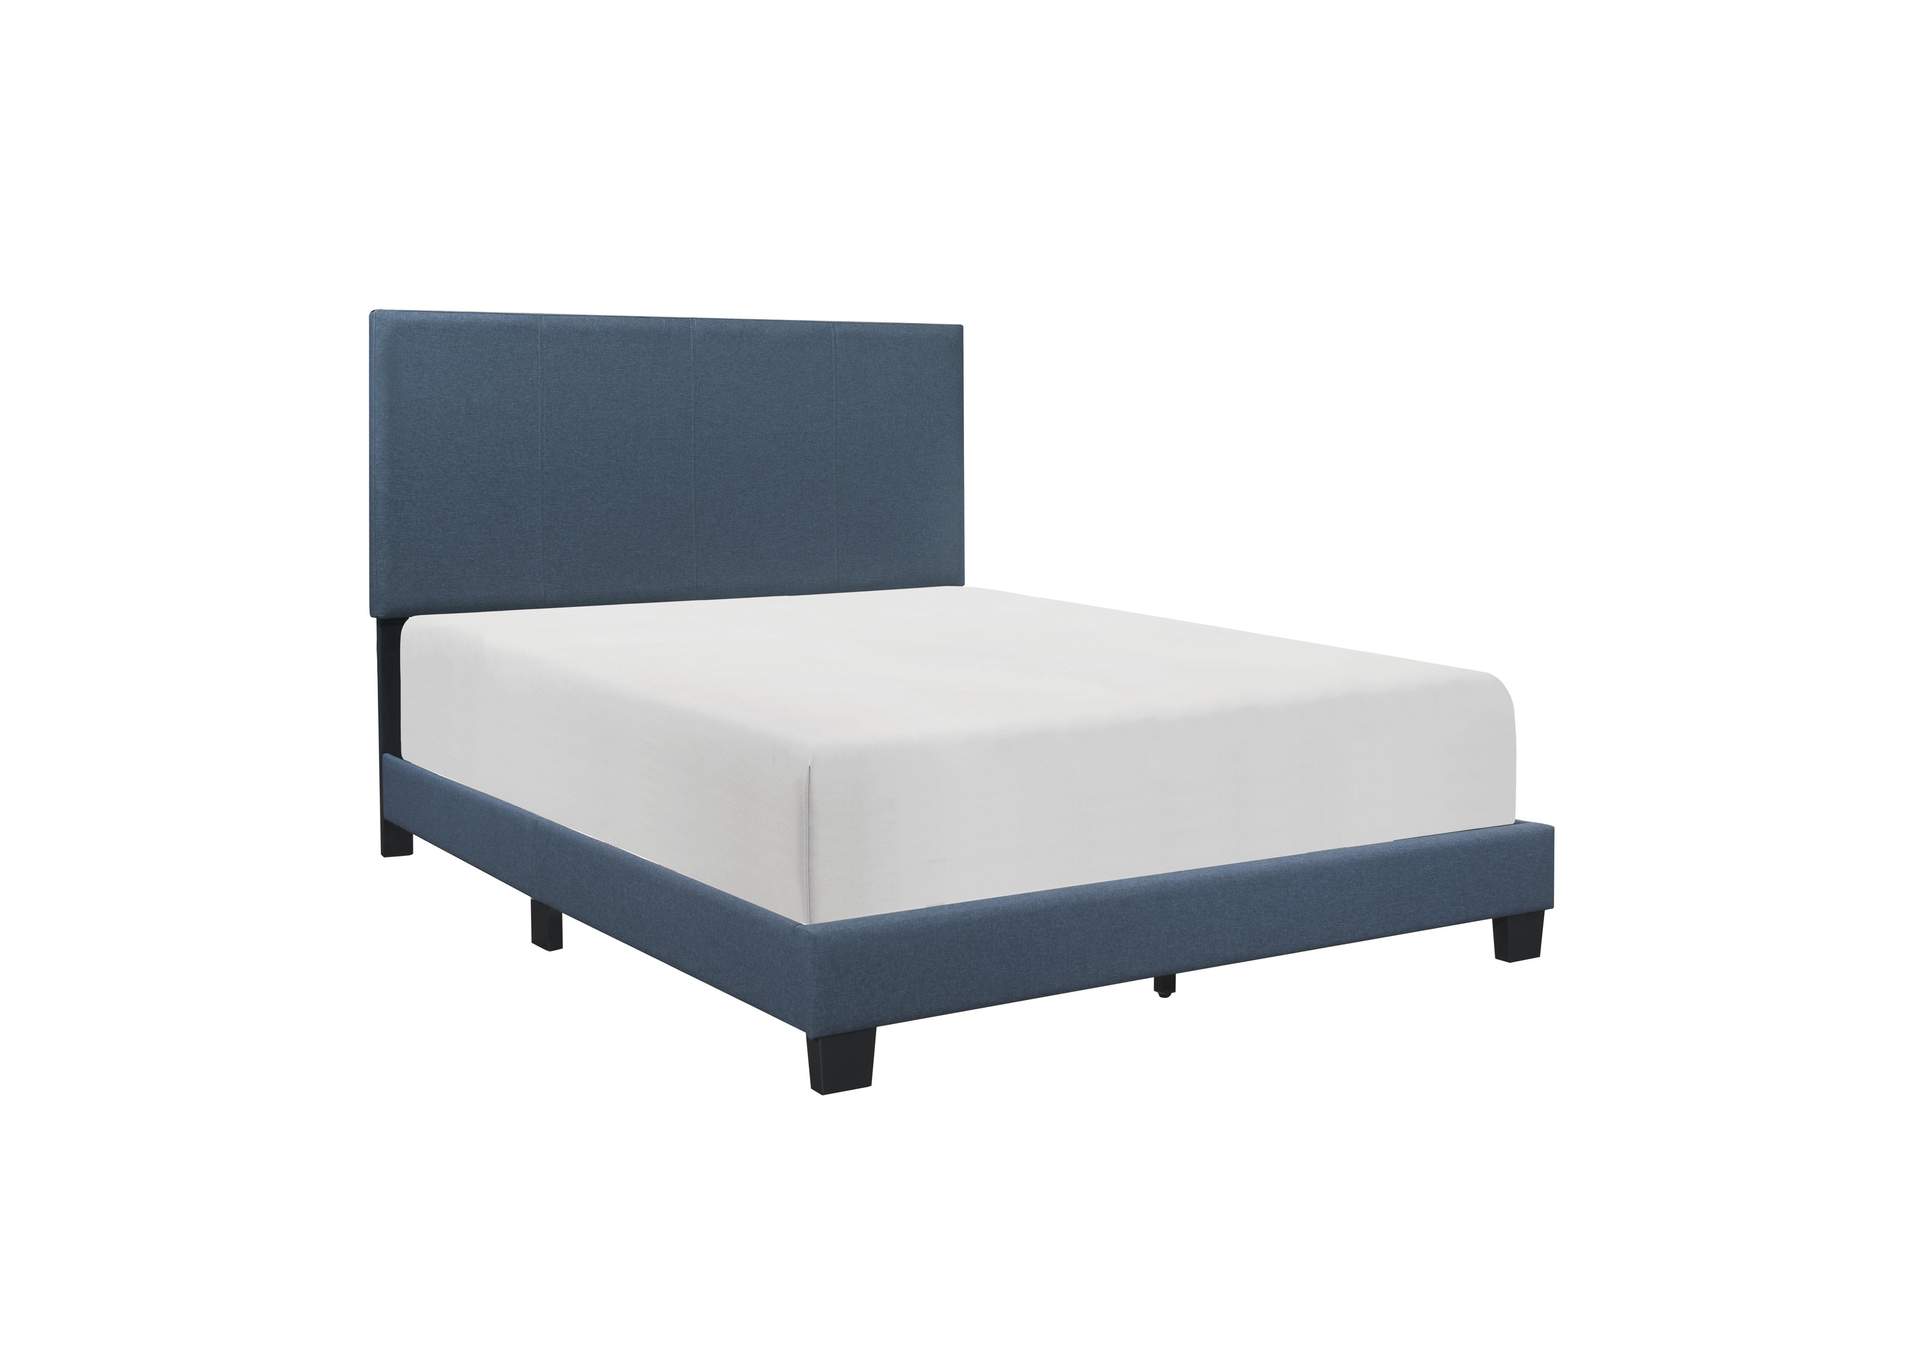 Nolens Blue Queen Bed in a Box,Homelegance